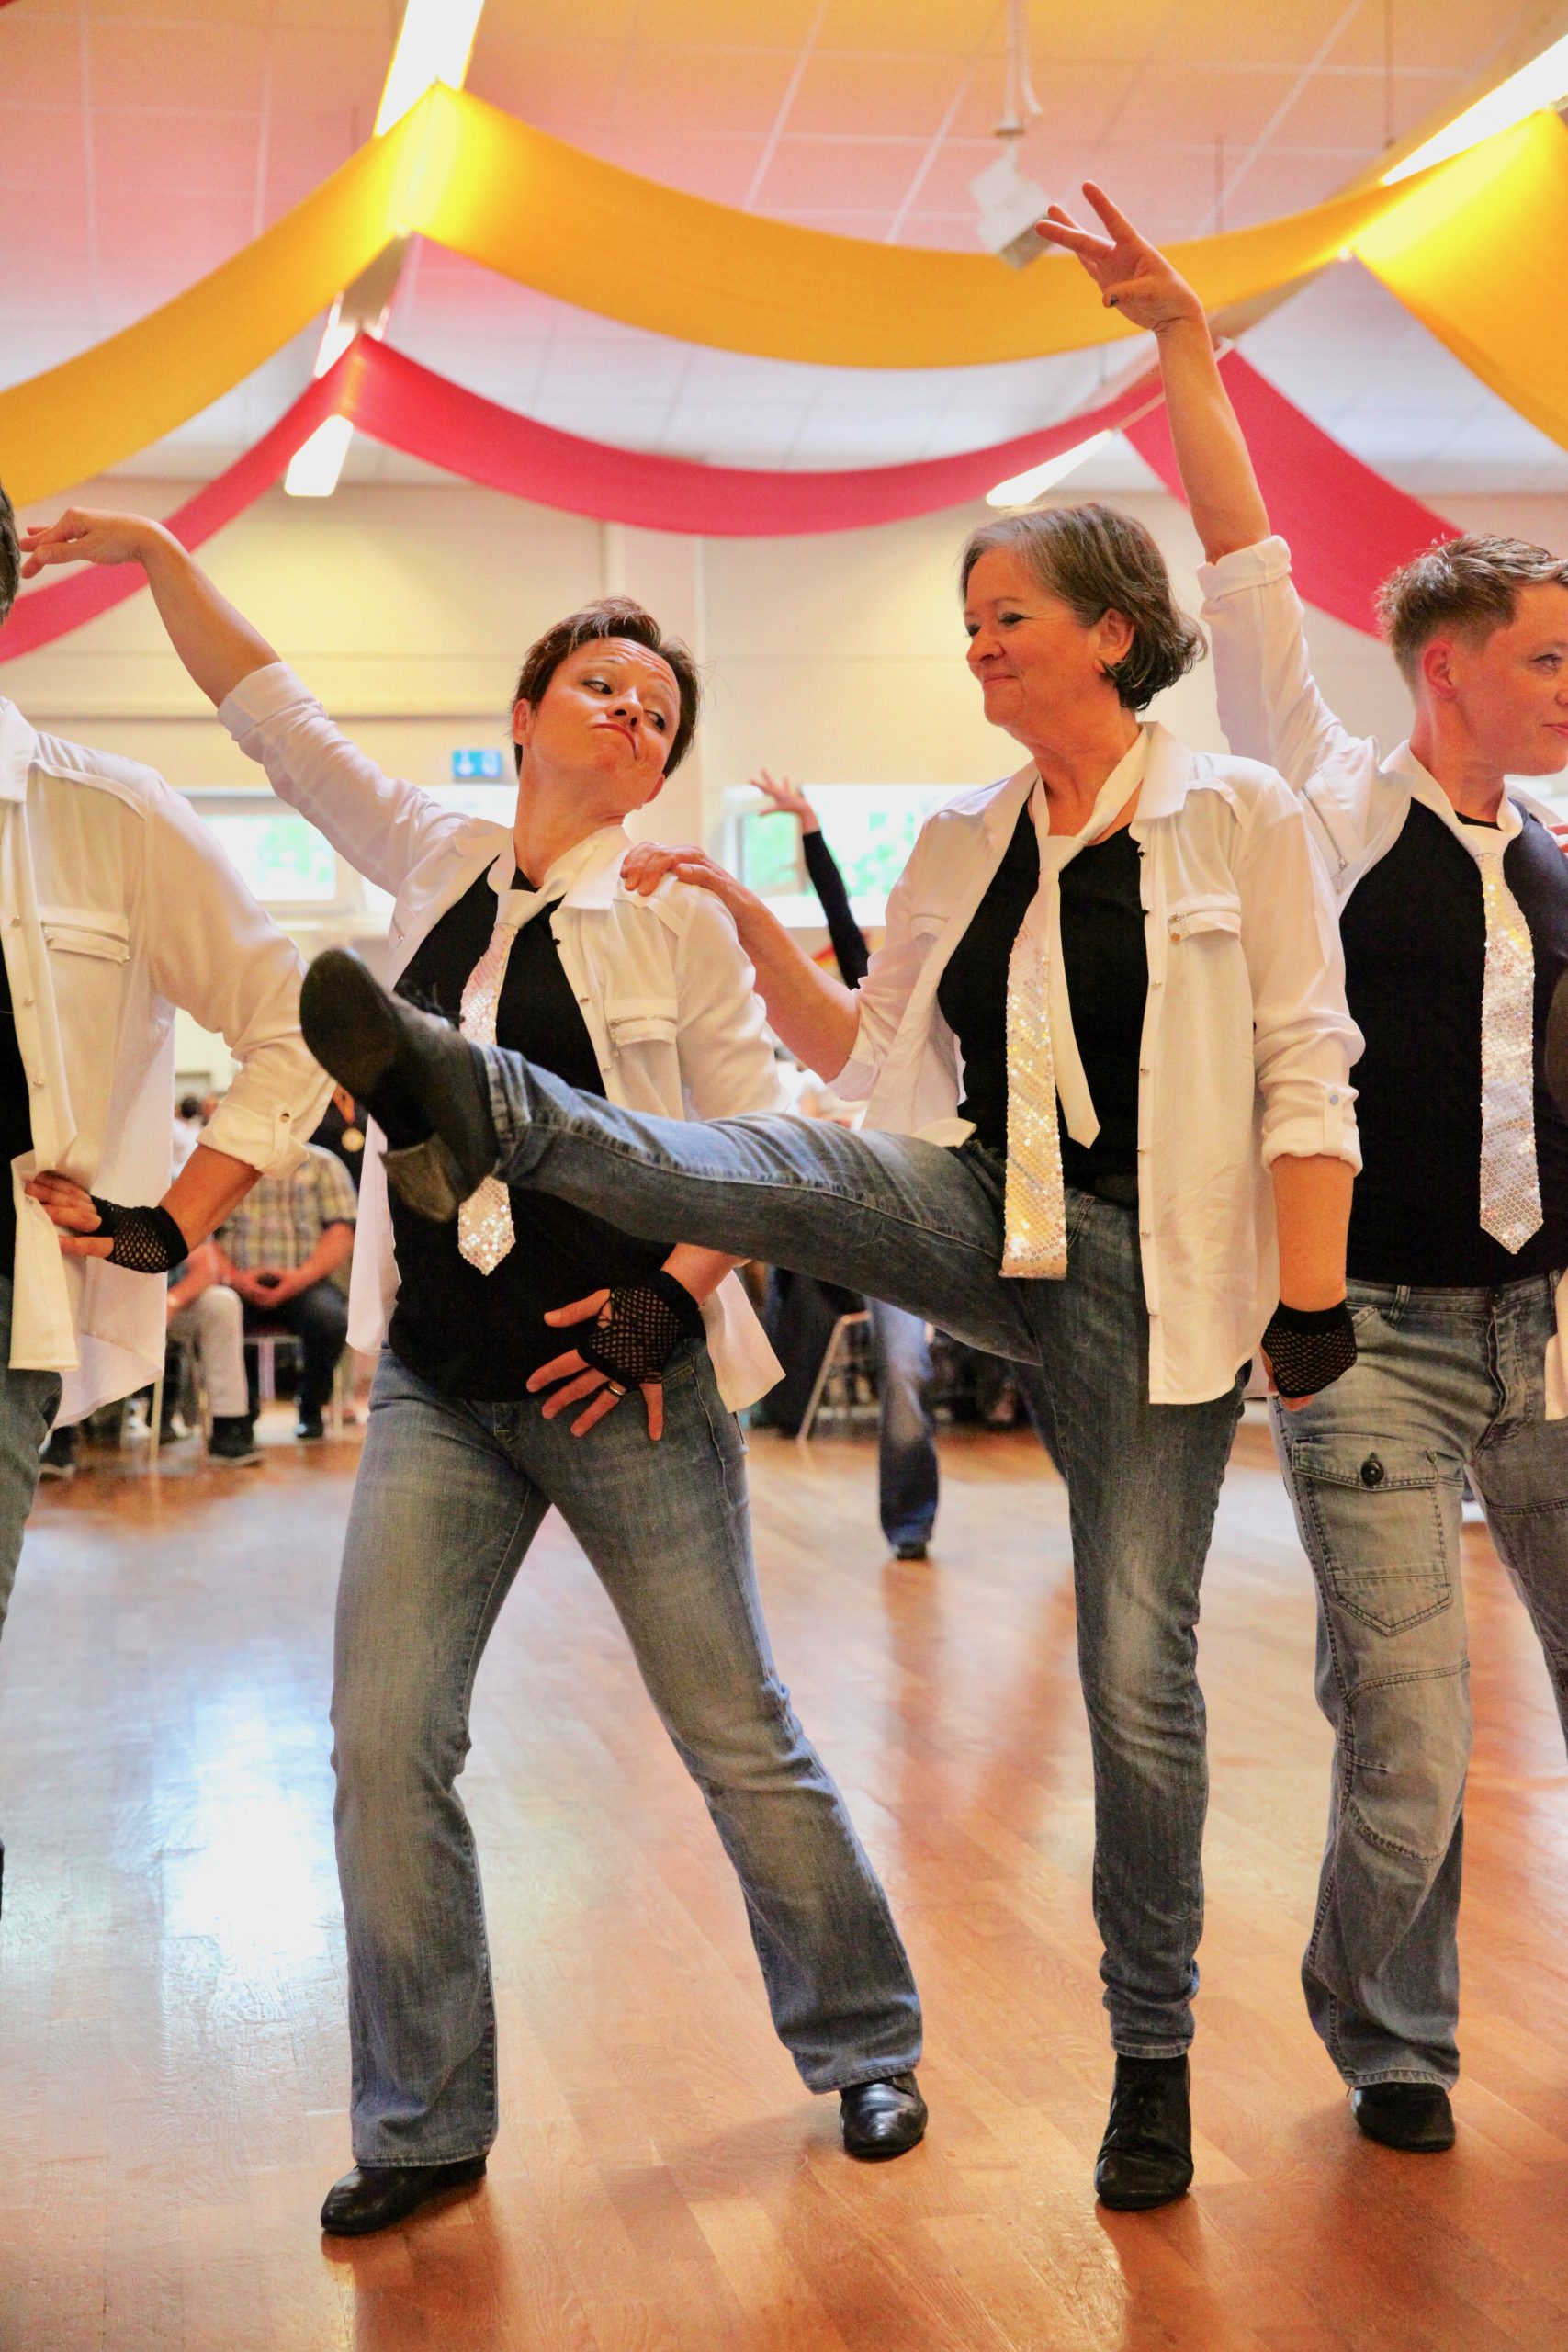 Bildarchiv Tanzschule Köln